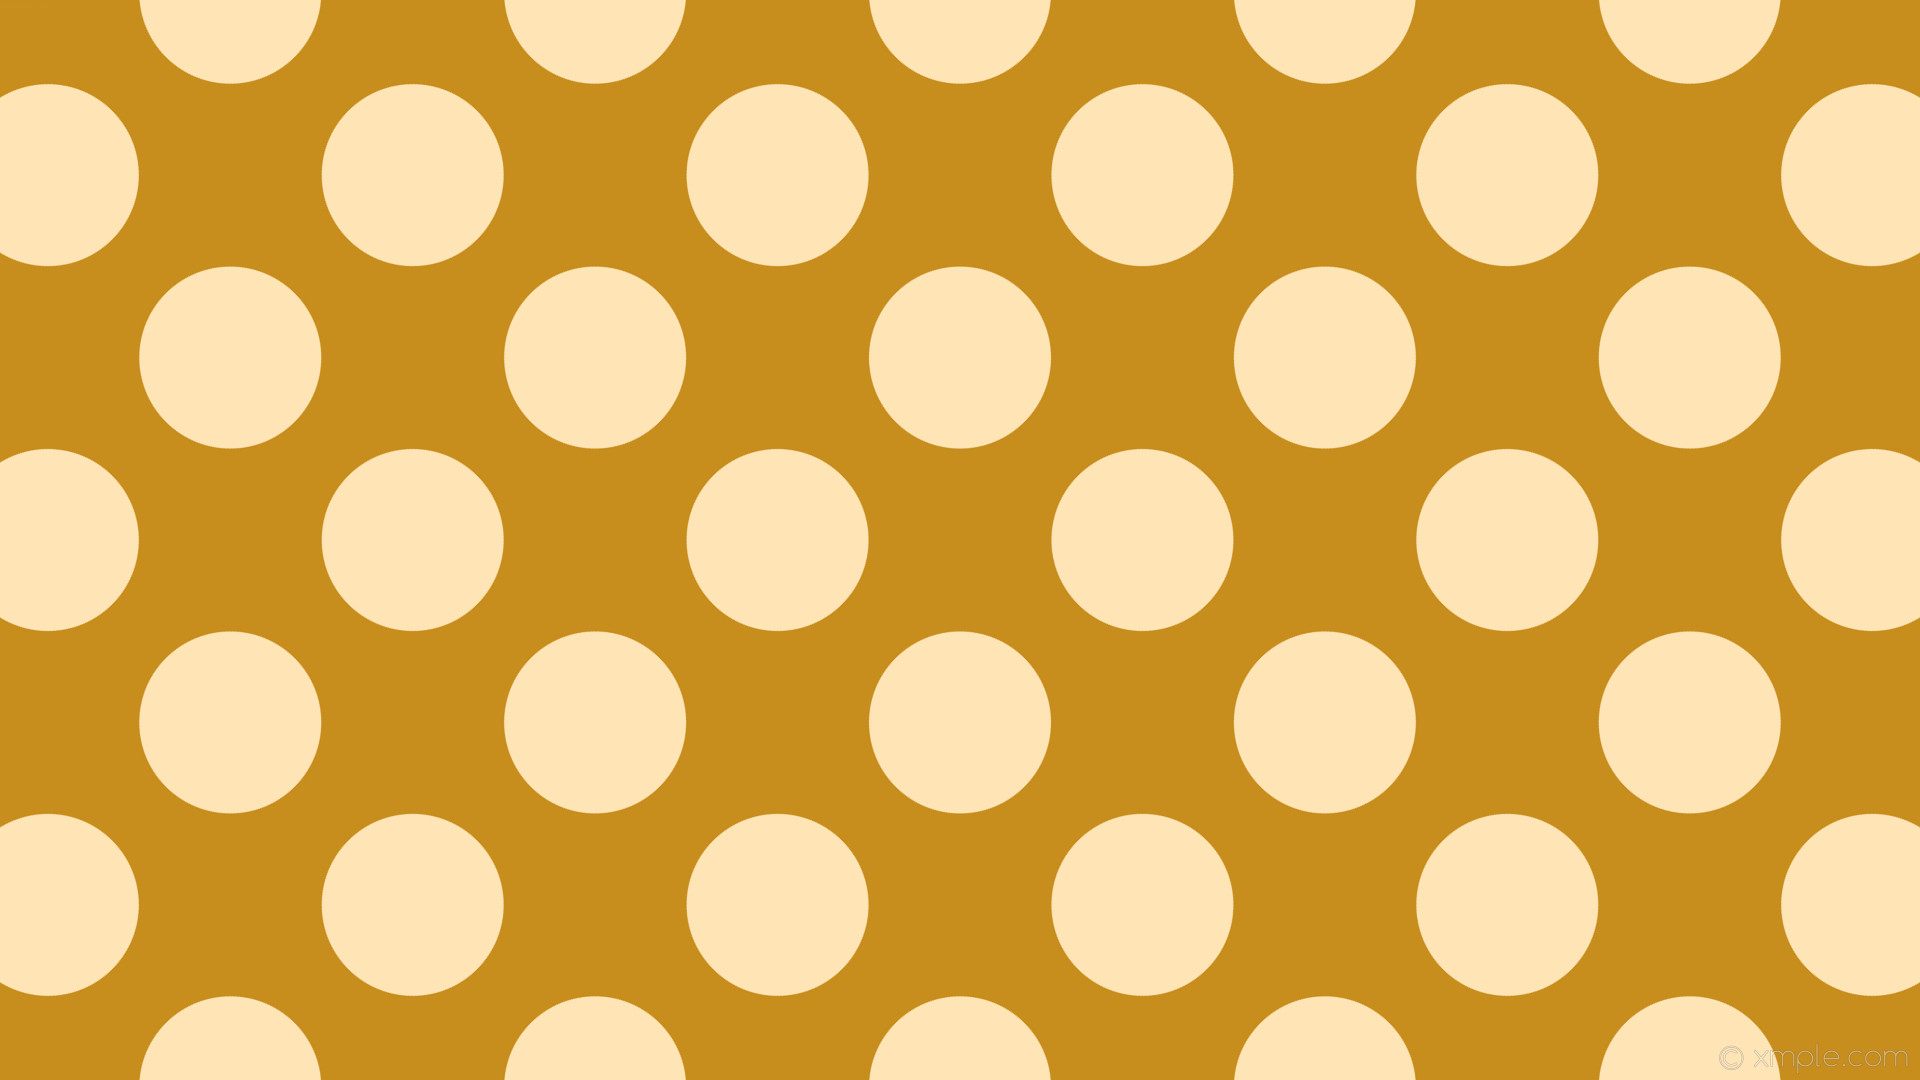 1920x1080 wallpaper spots yellow polka orange dots moccasin #c78d1d #ffe4b5 225Â°  182px 258px